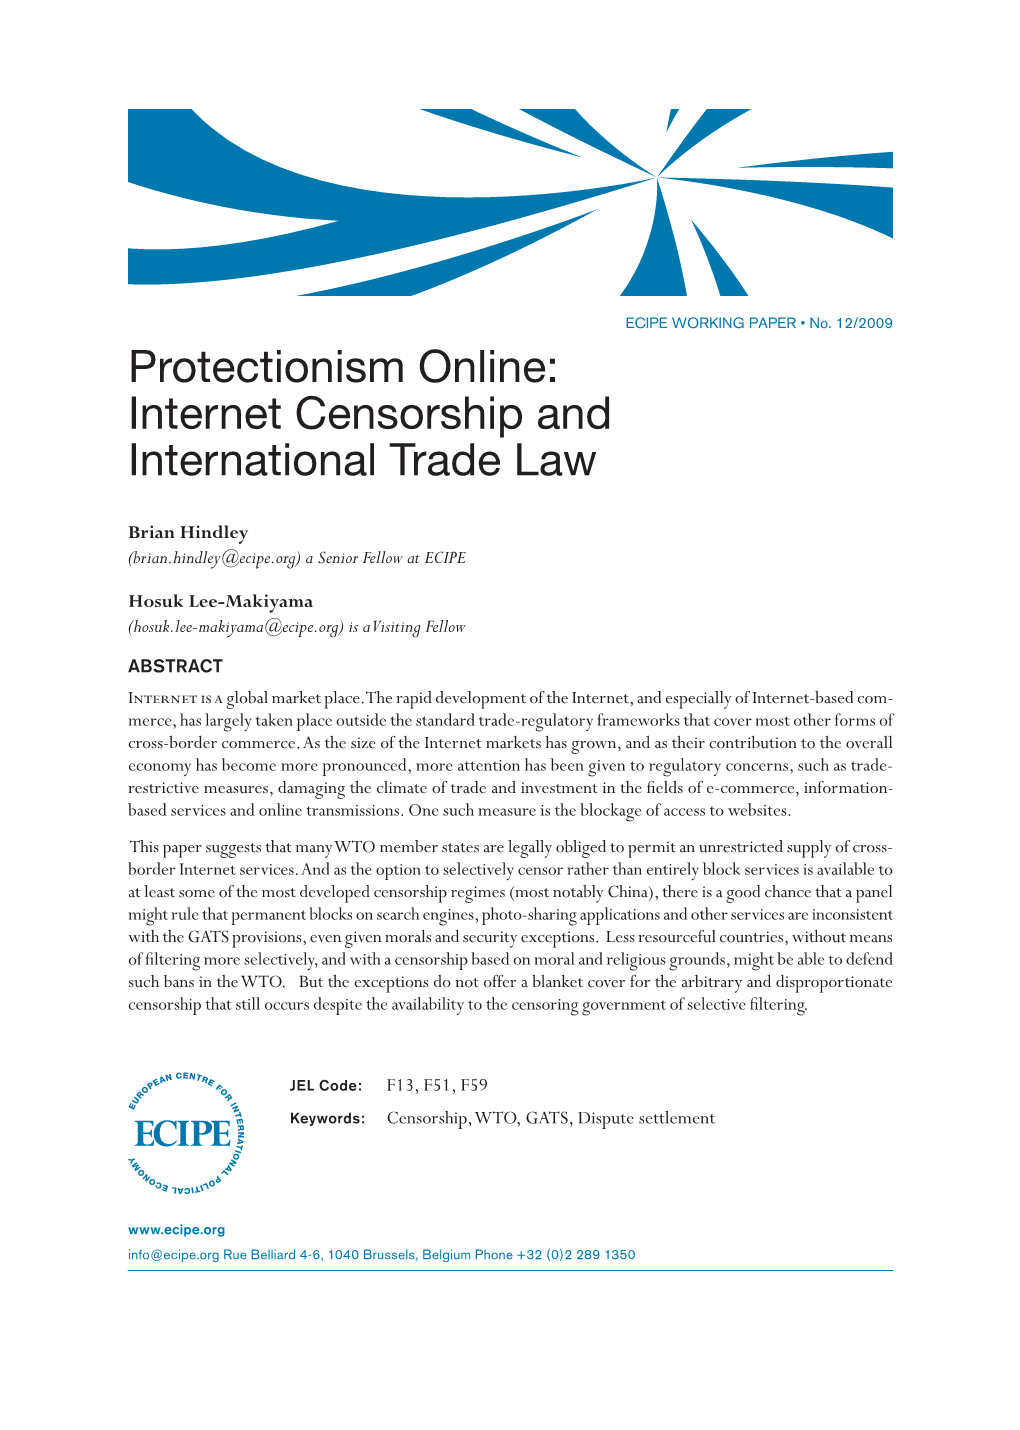 Internet Censorship and International Trade Law